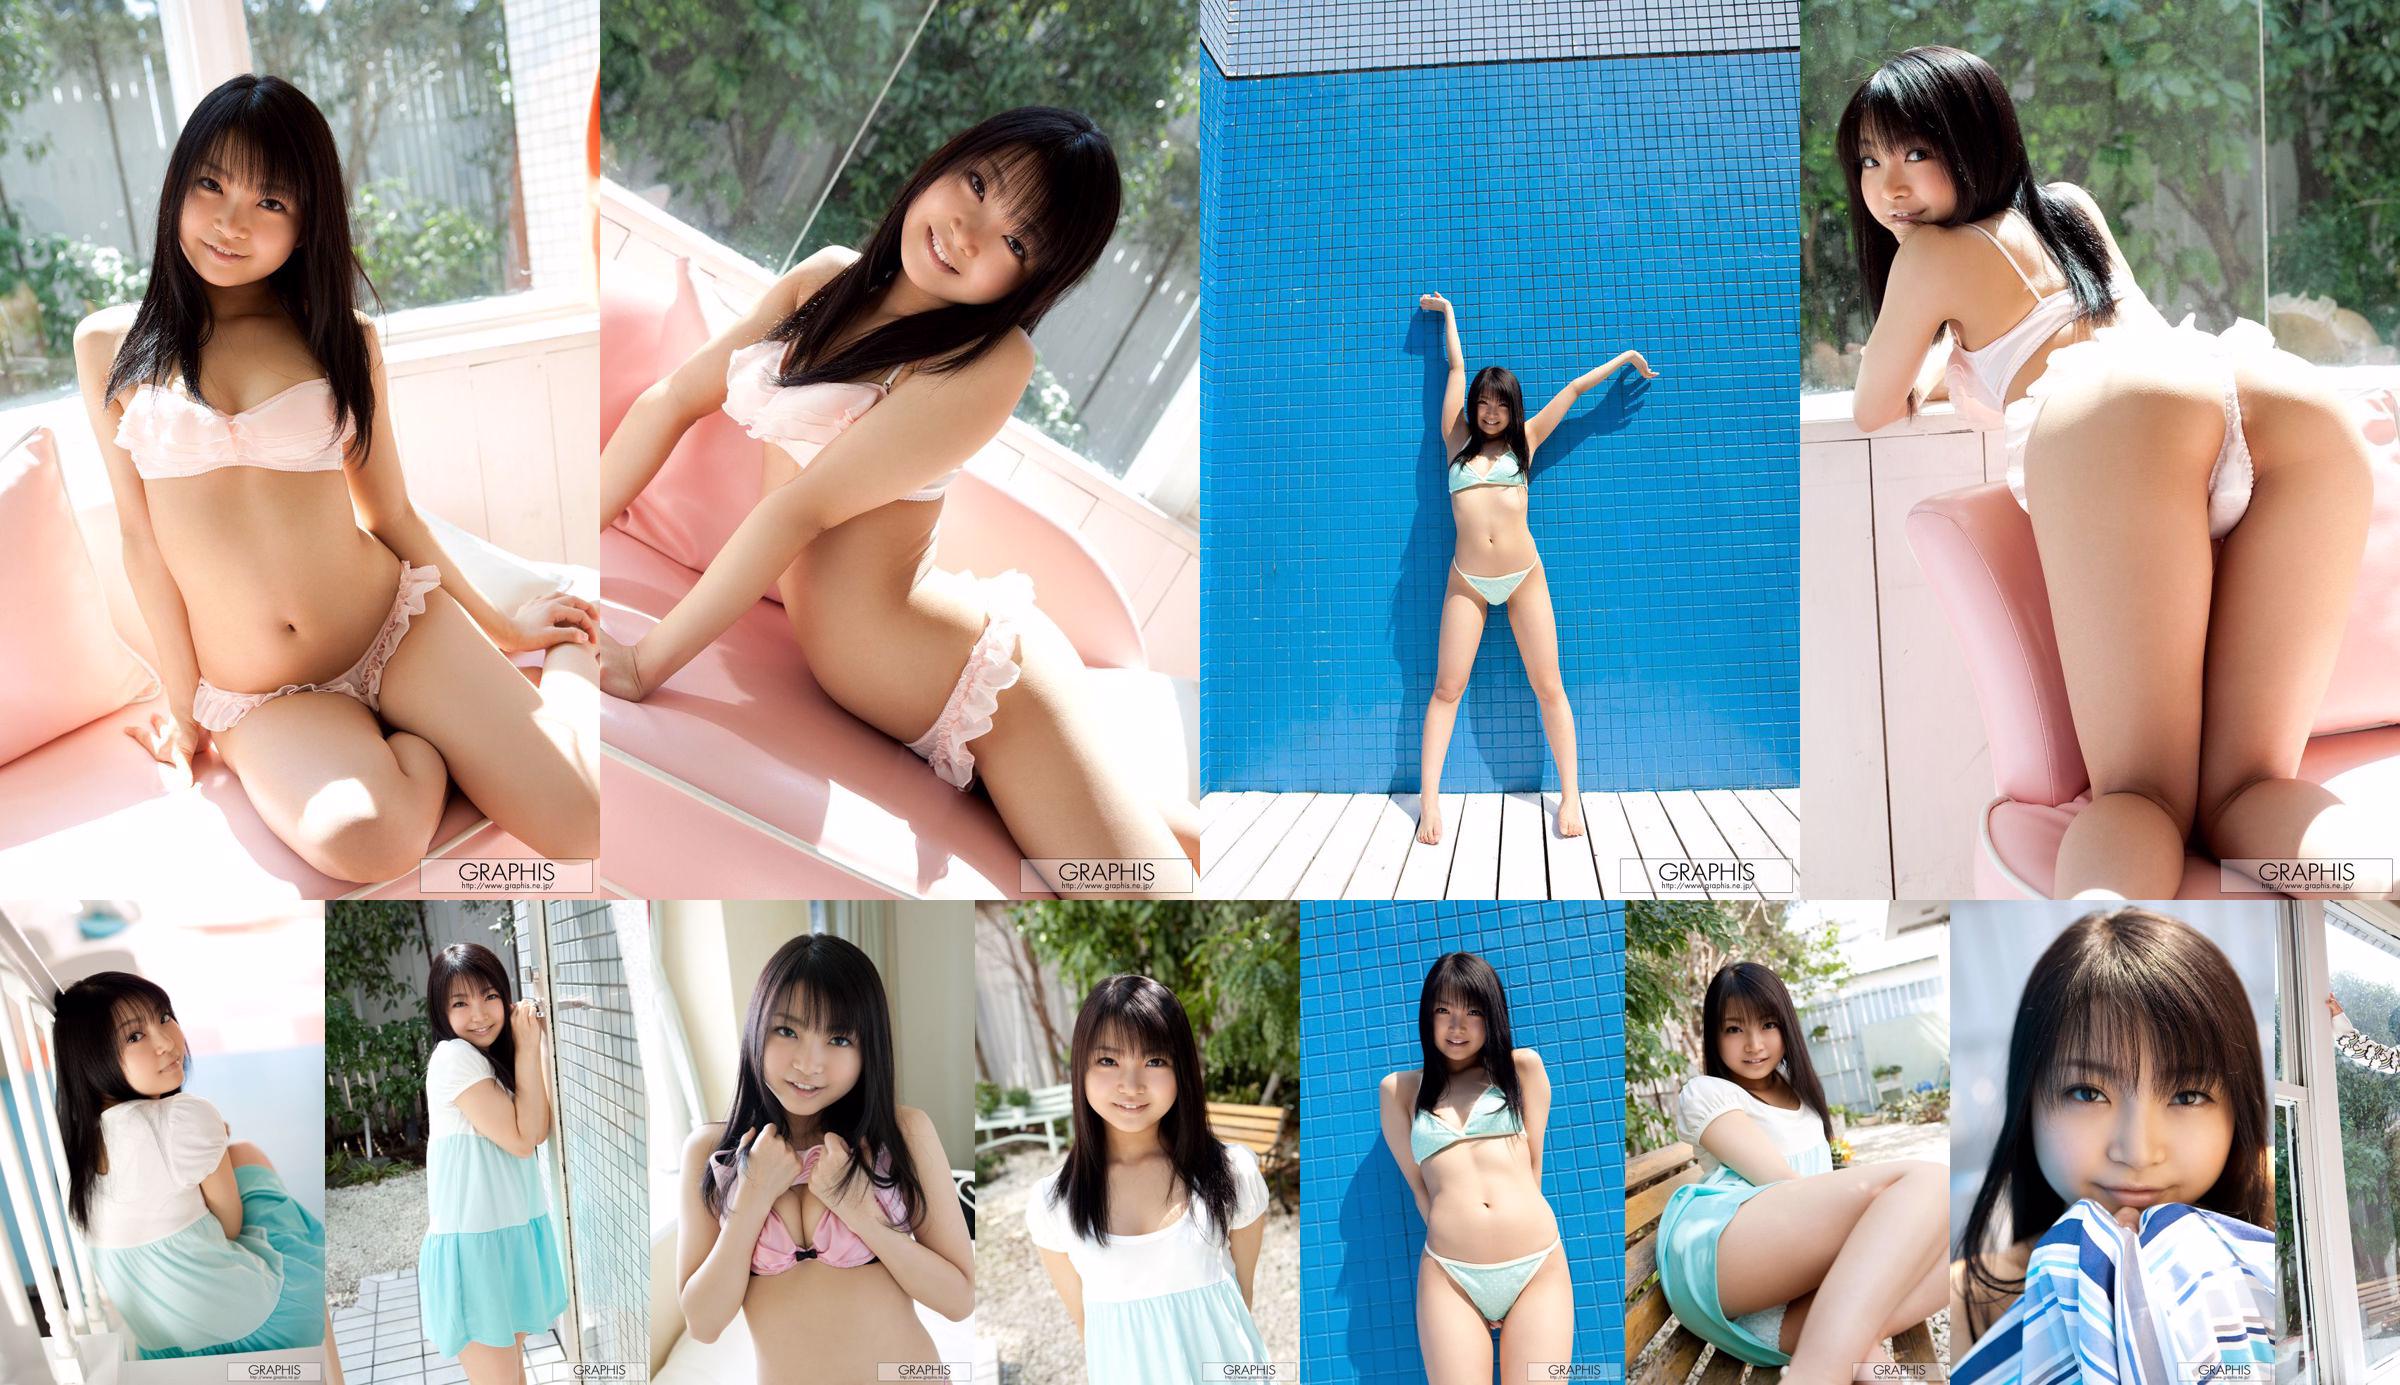 Chihiro Aoi / Chihiro Aoi [Graphis] Primera fotograbado Primera hija No.b8c062 Página 5